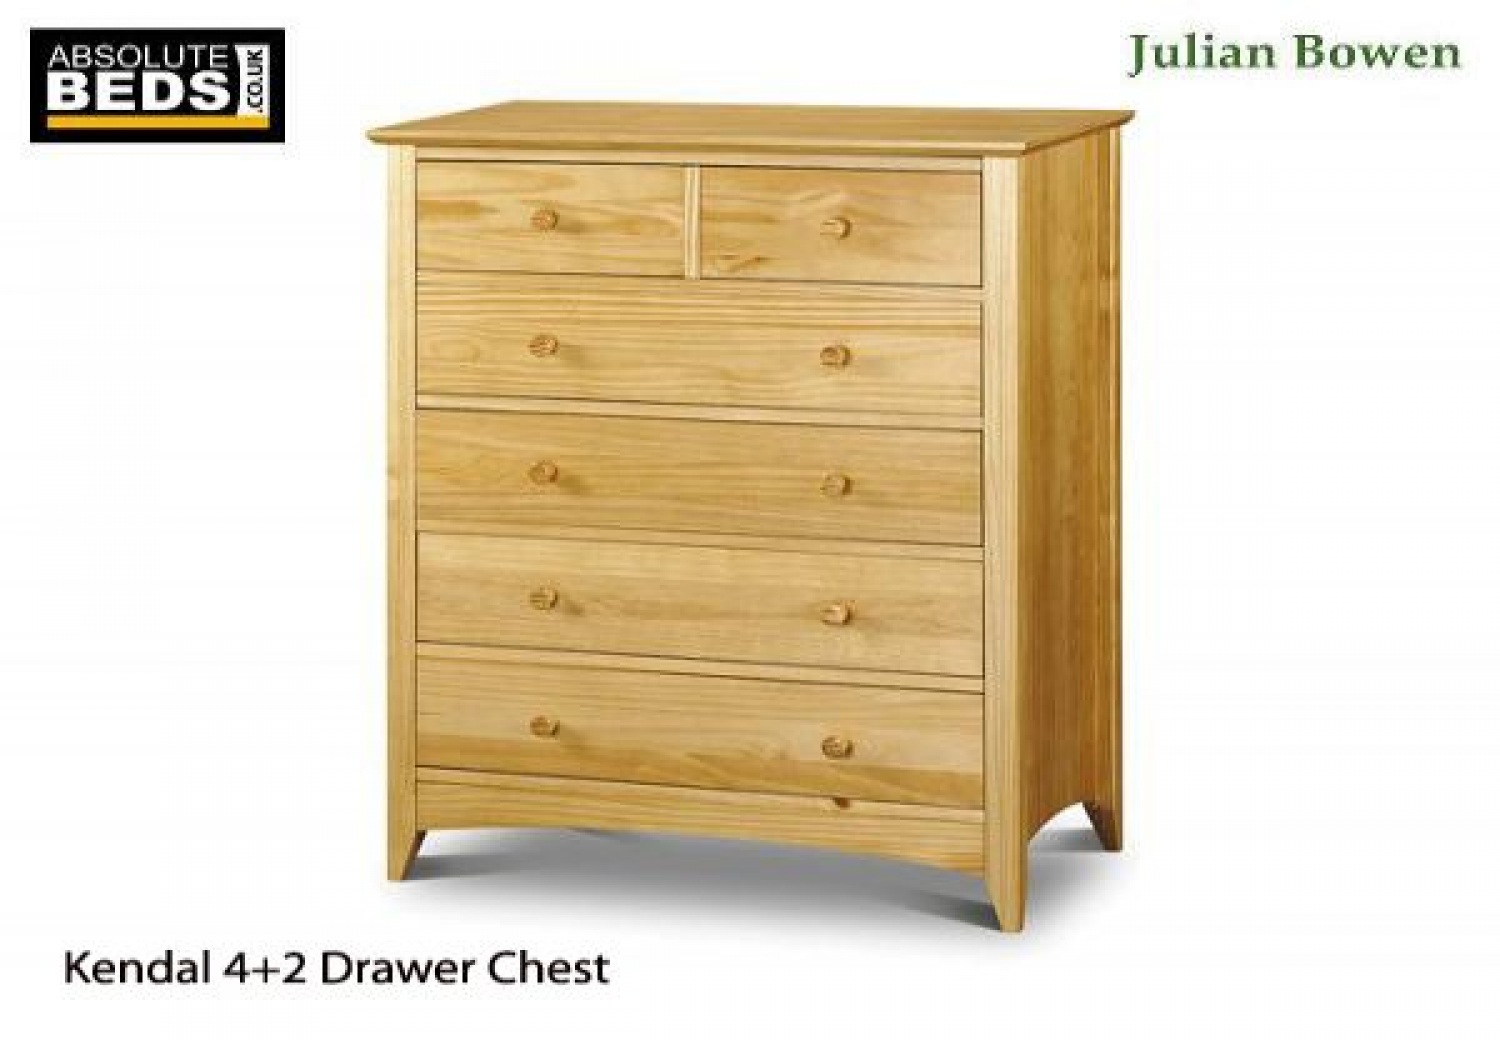 julian bowen kendal 4+2 chest of drawers image